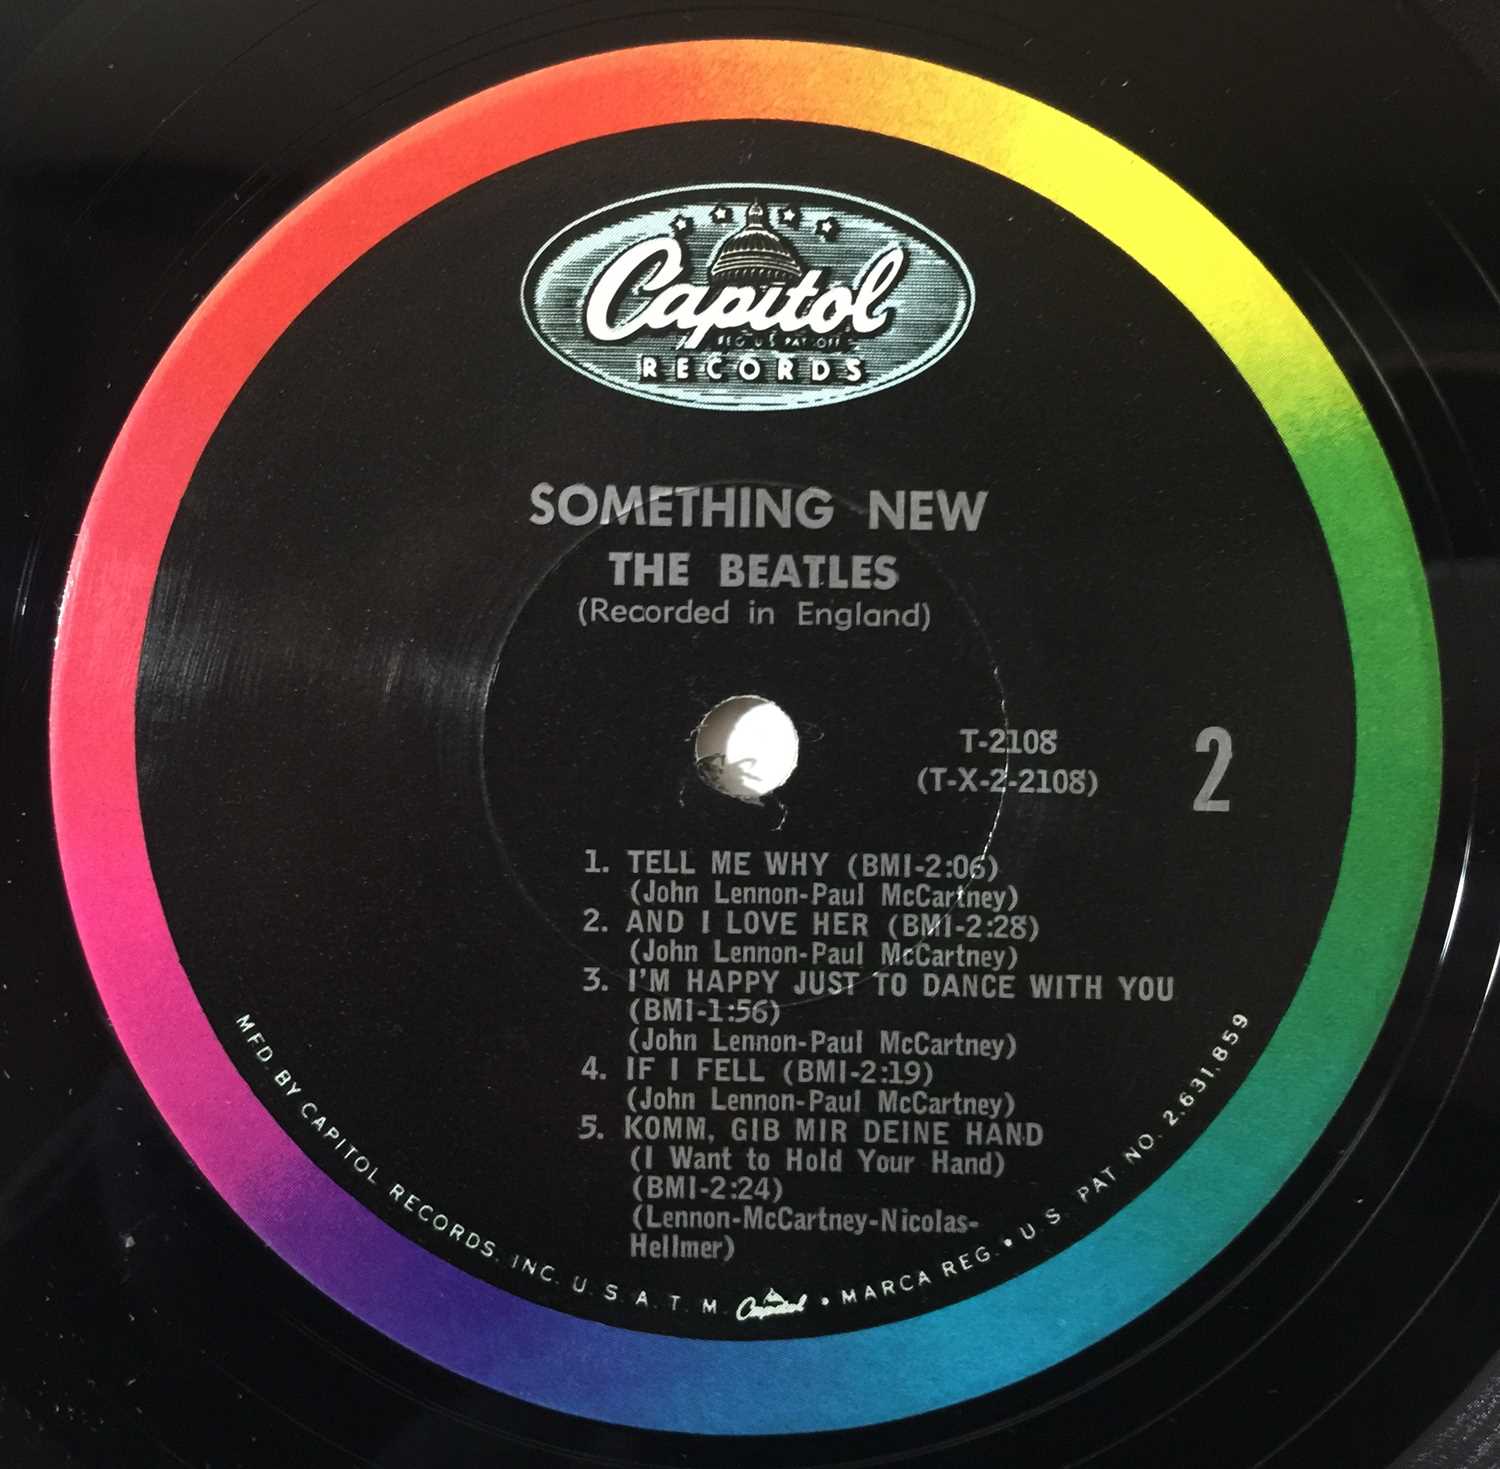 THE BEATLES - SOMETHING NEW LP (ORIGINAL US MONO PRESSING - CAPITOL T 2108 - SUPERB COPY) - Image 4 of 4